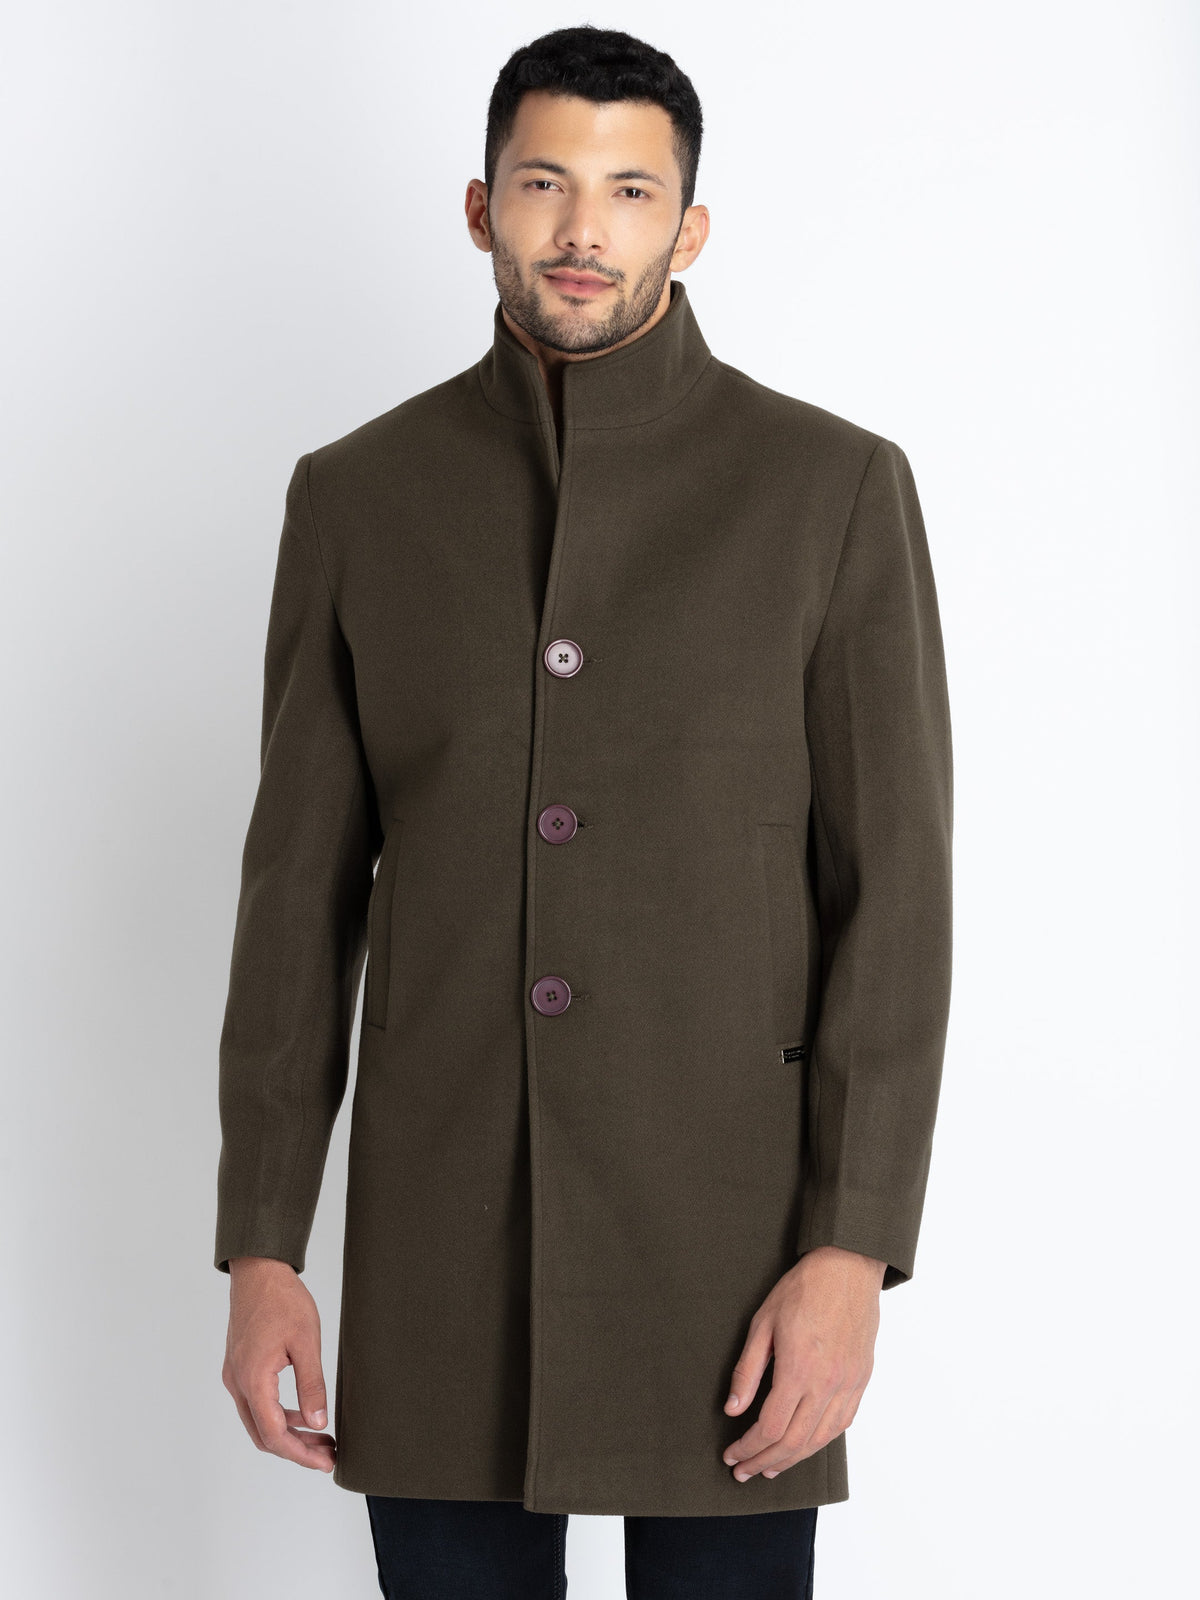 overcoat for men